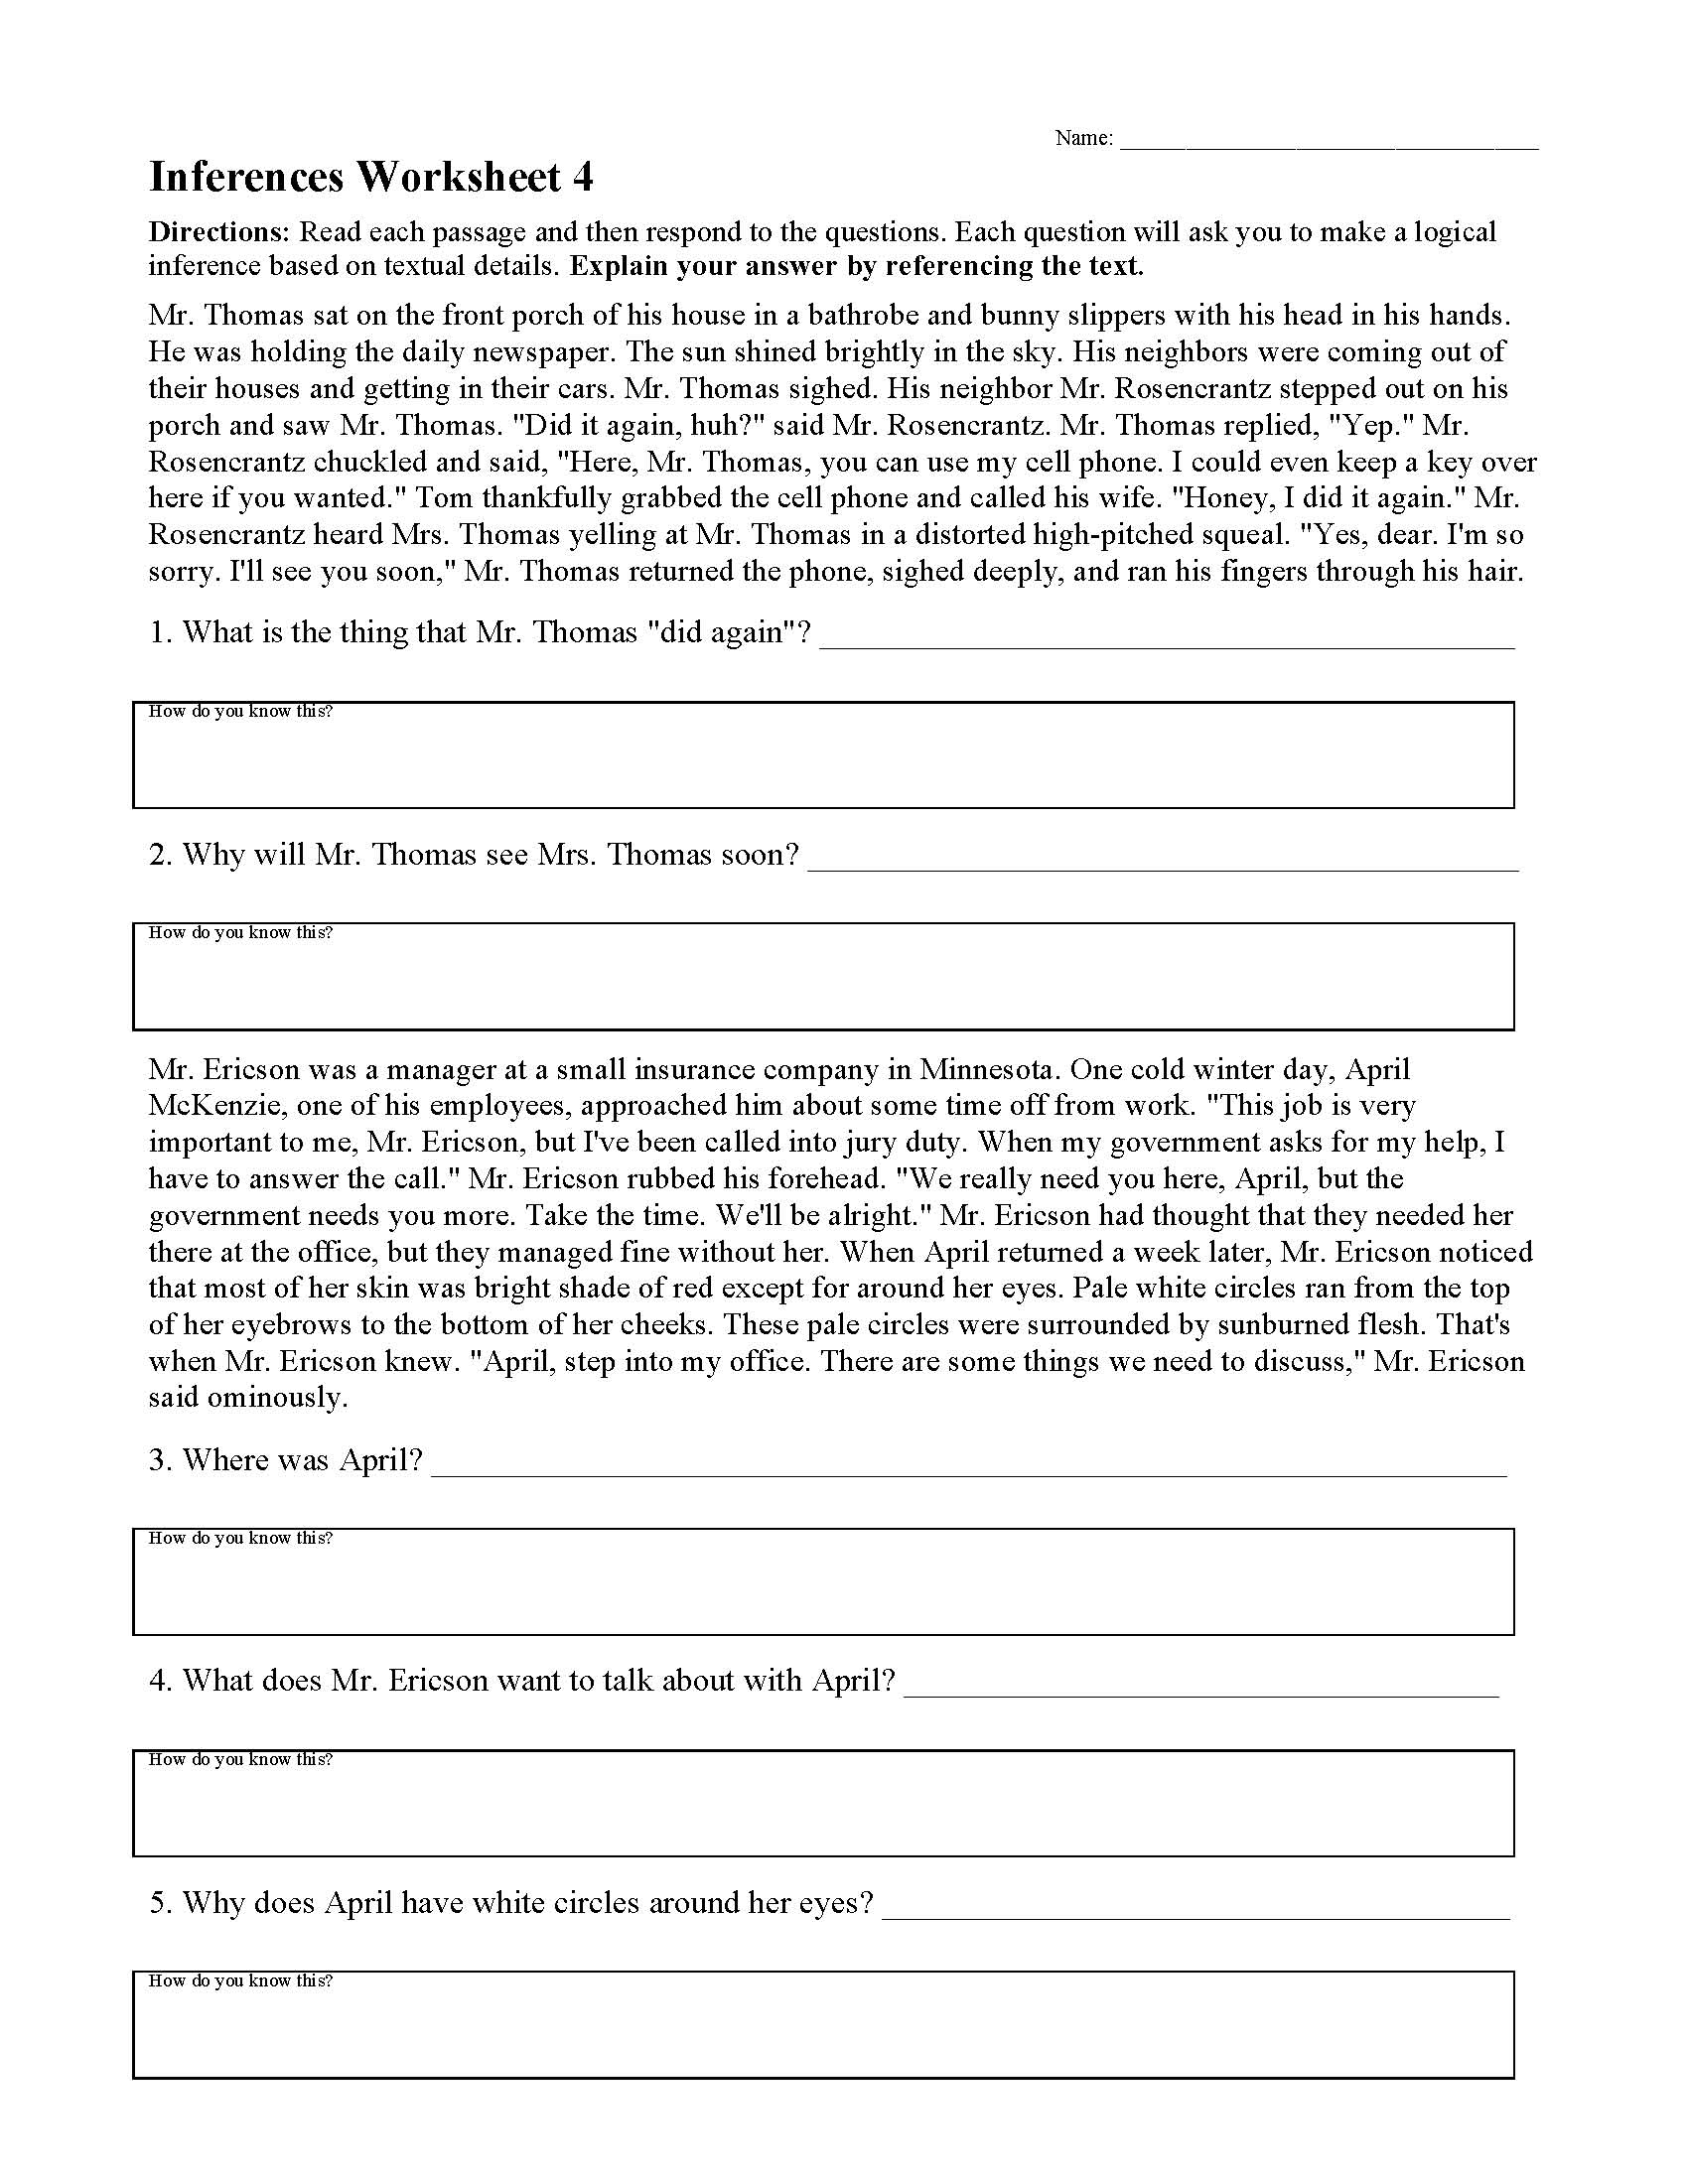 6th grade inferences worksheet